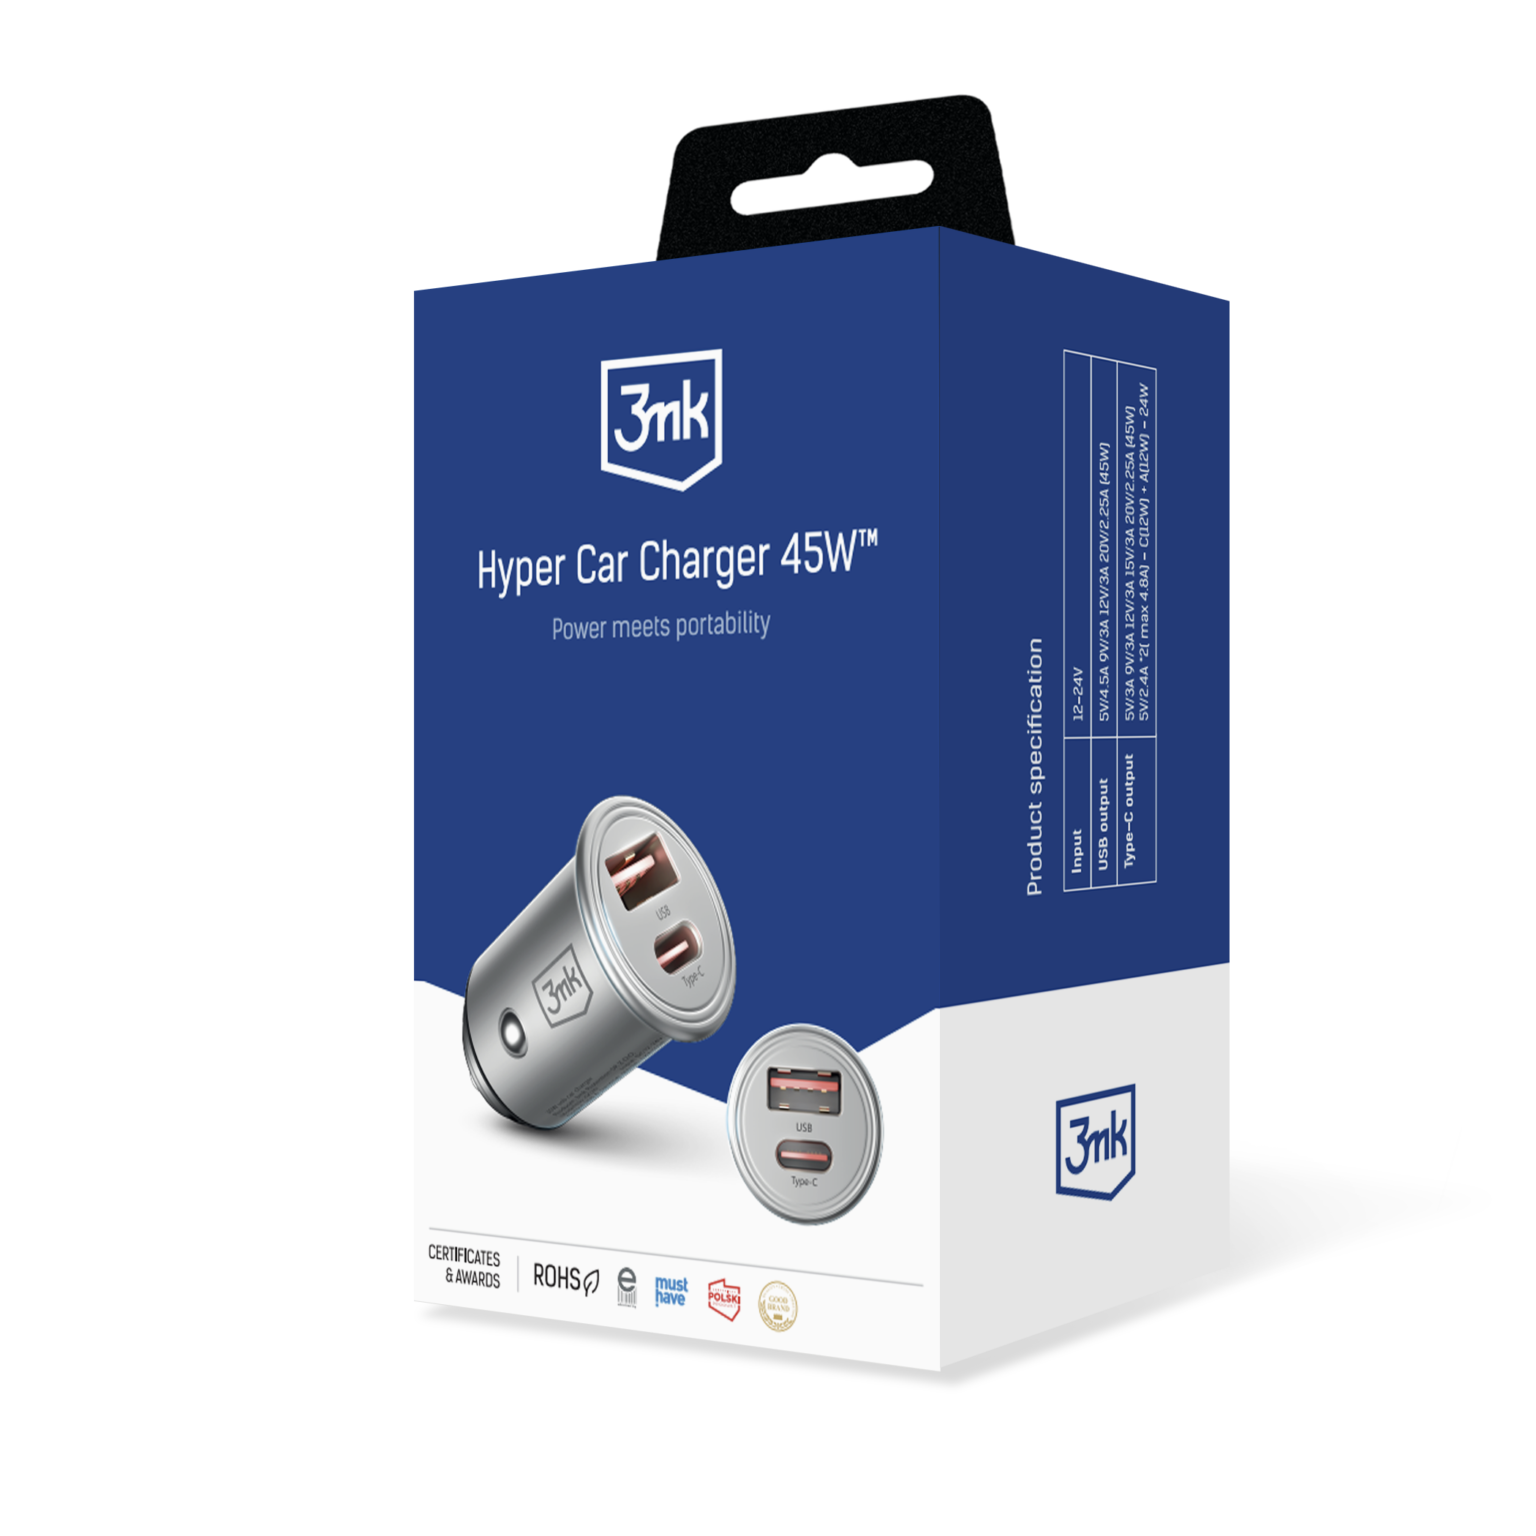 3mk-hyper-car-charger-45W_-packshot-02-1536x1536